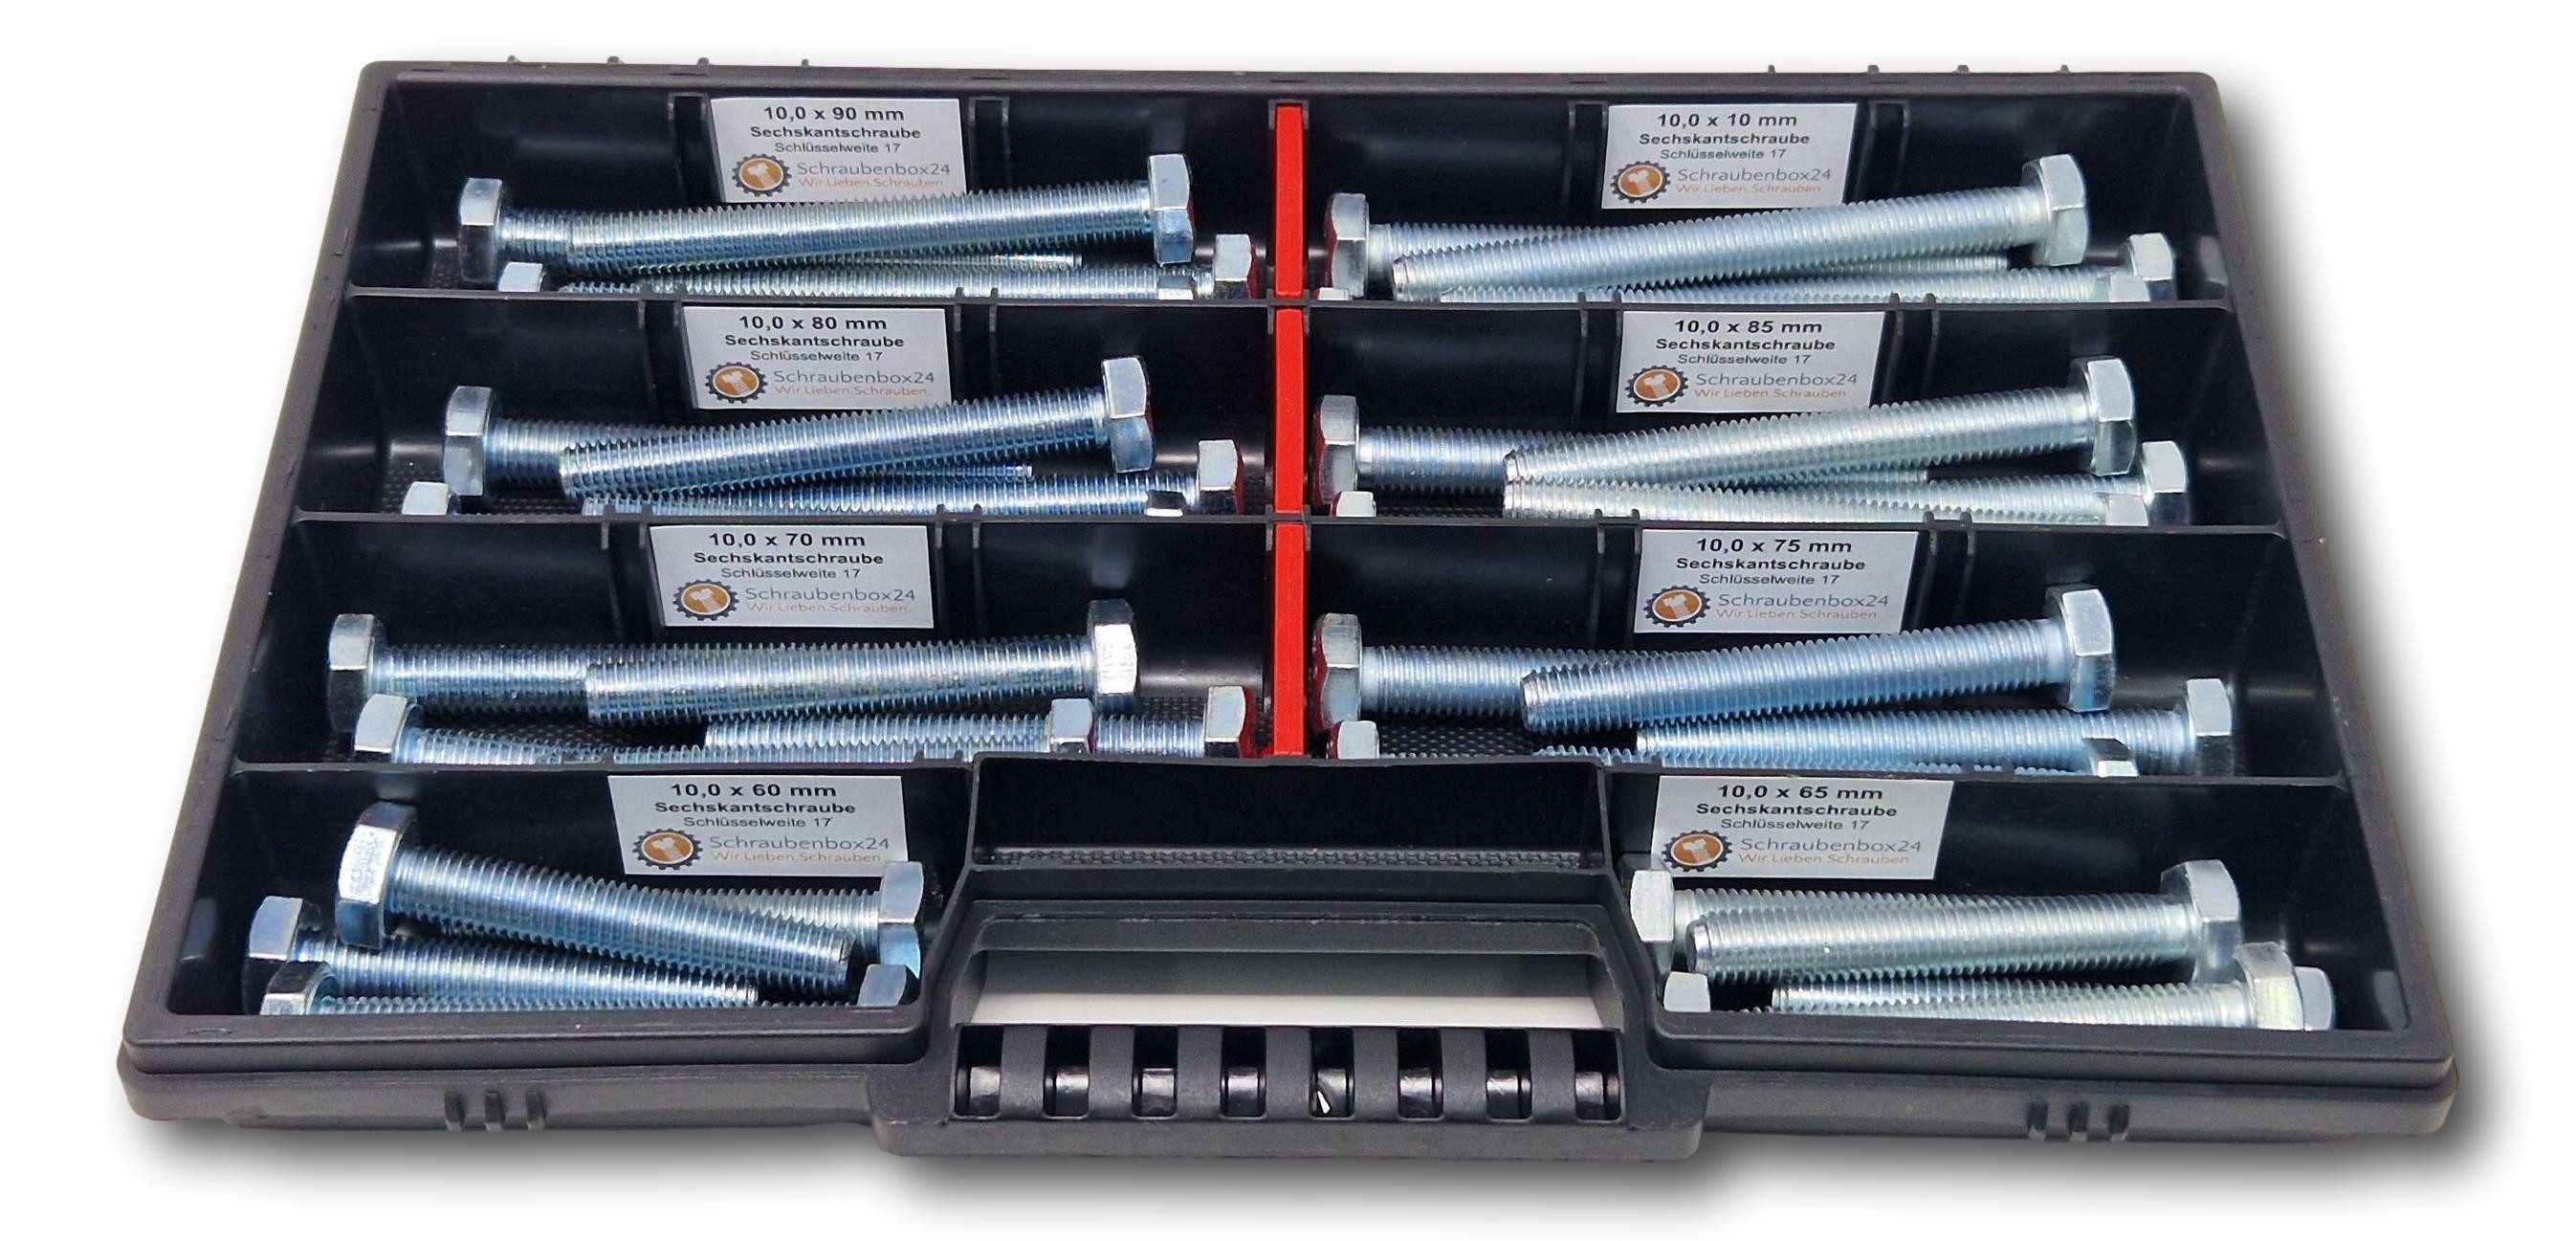 Schraubenbox24 Sechskantschraube Sortiment M10 // 60mm-100mm, (DIN 933 ISO 4017, 40 St., galvanisch verzinkt), 40 Stück Sechskantschrauben